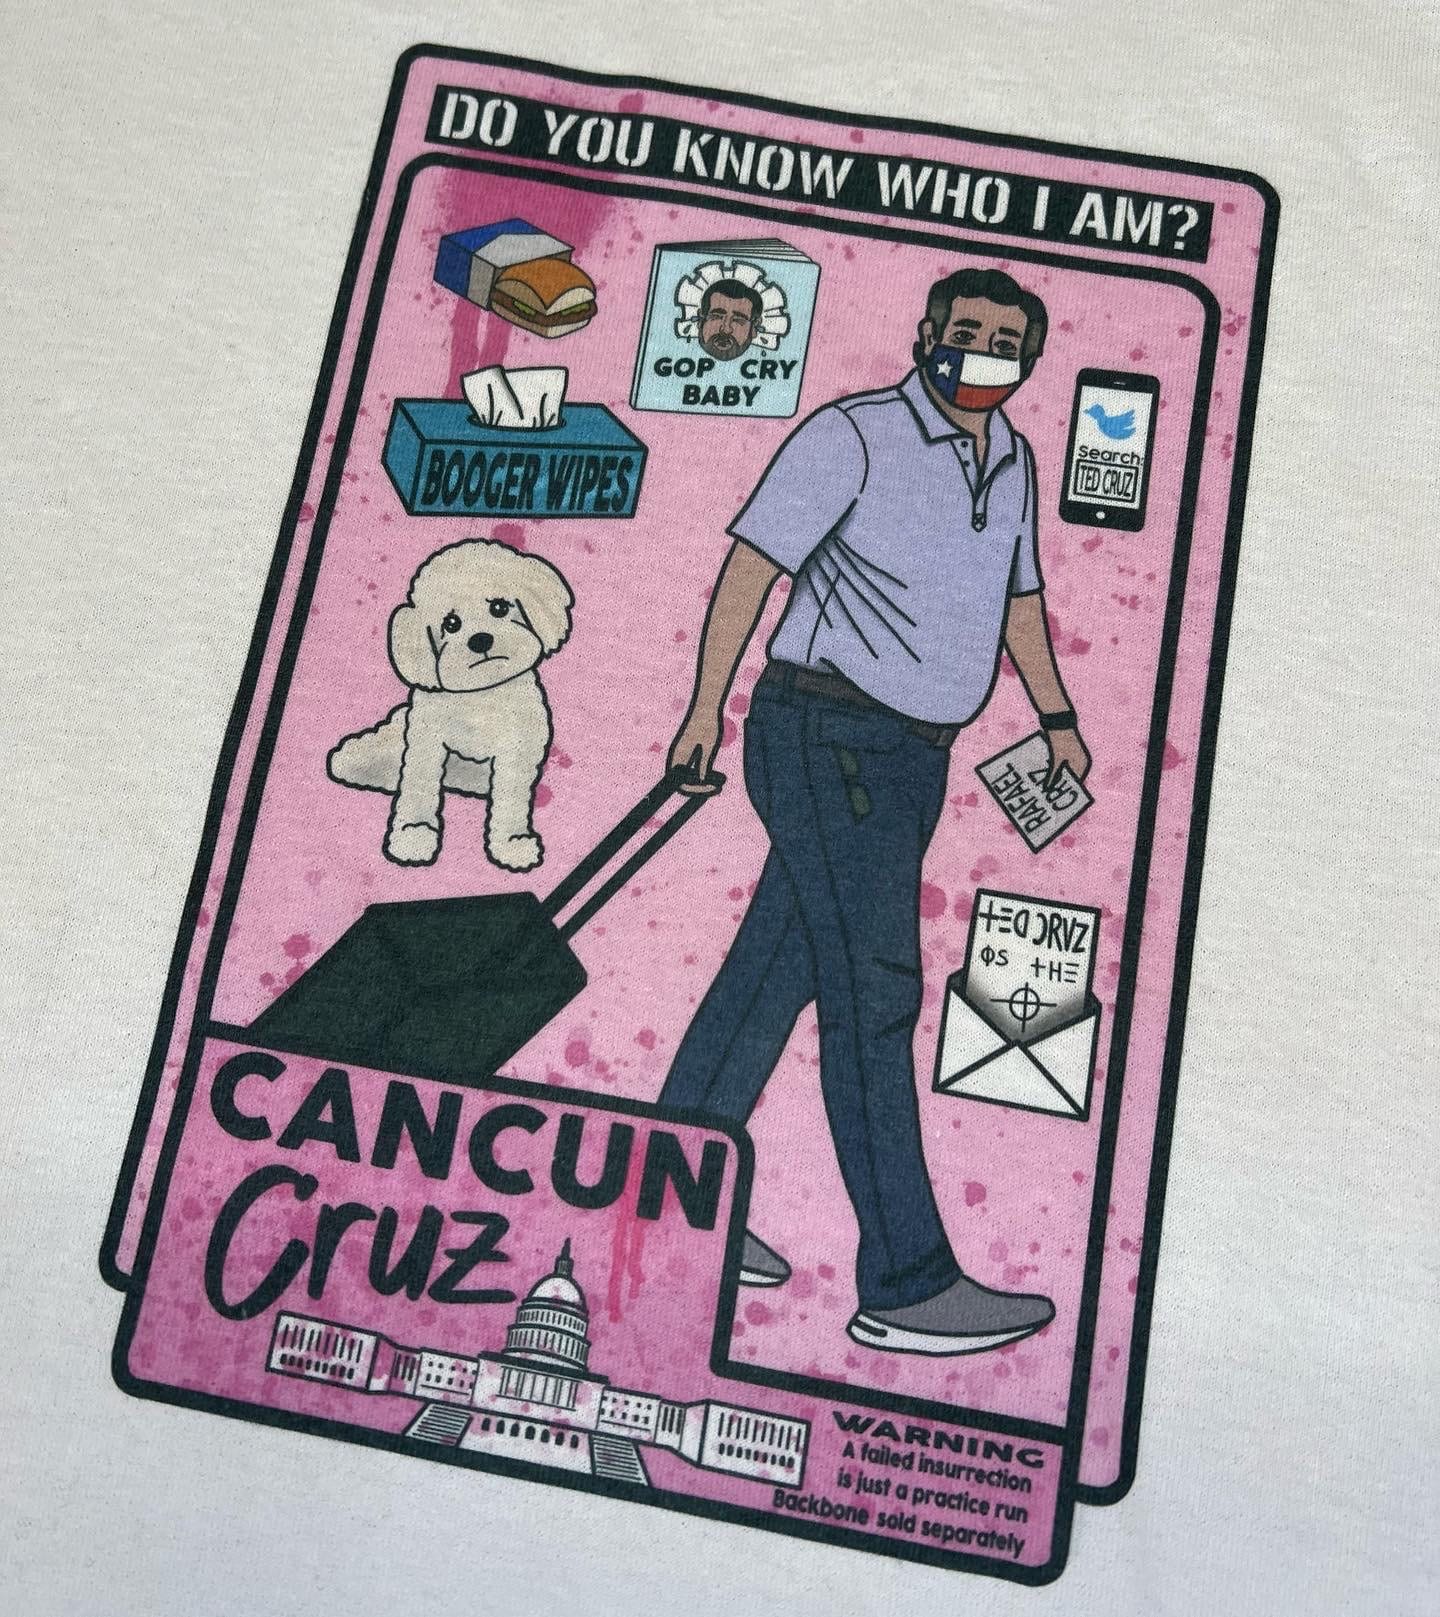 Cancun Cruz T Shirt Ted Cruz as Ken Satire Parody